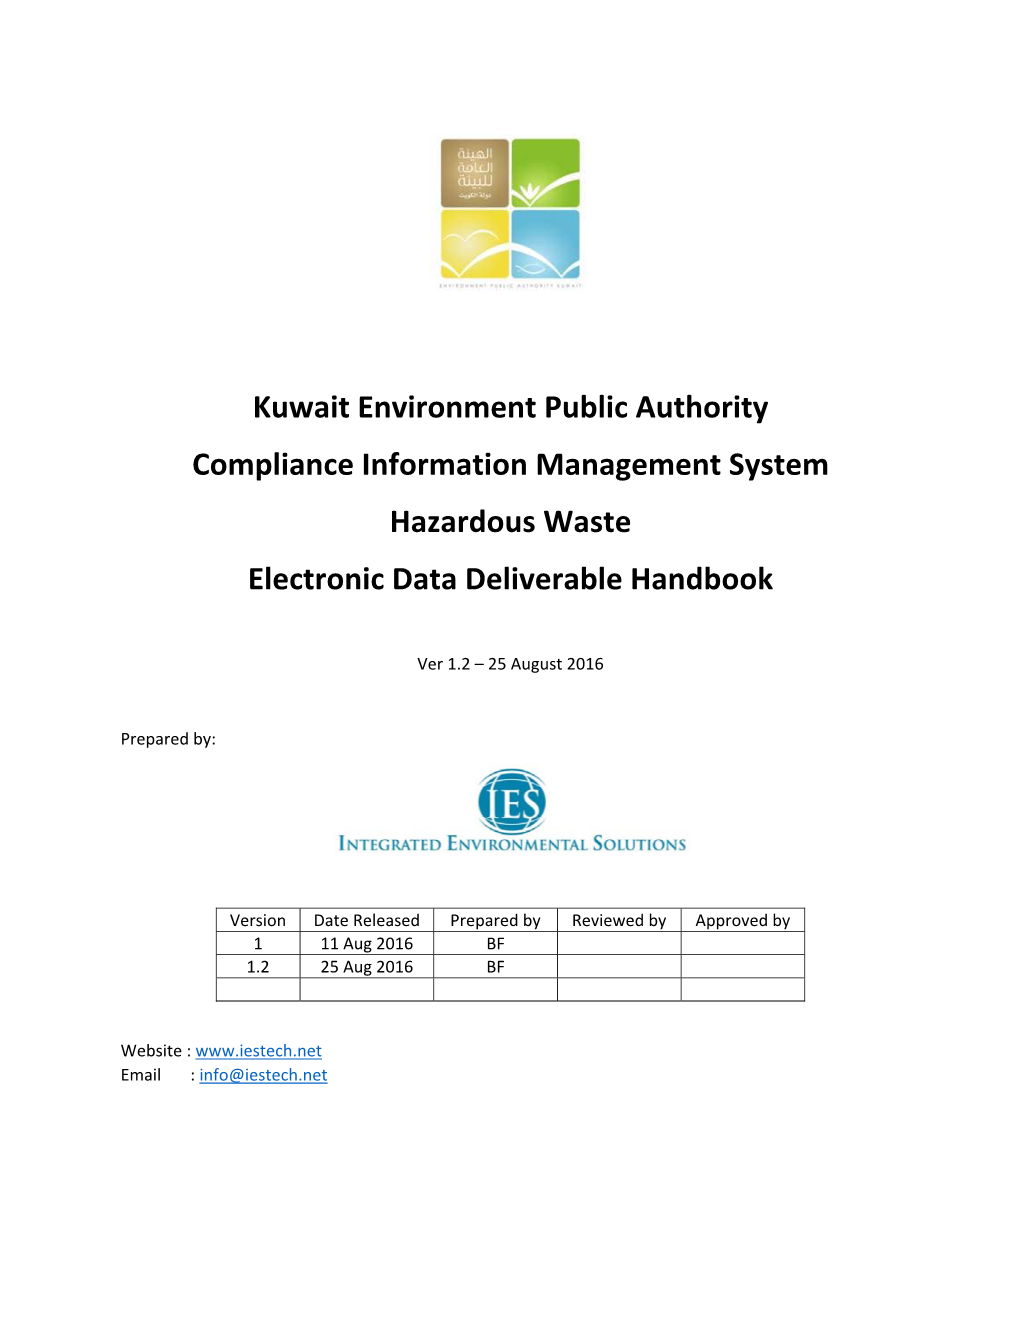 Kuwait Environment Public Authority Compliance Information Management System Hazardous Waste Electronic Data Deliverable Handbook